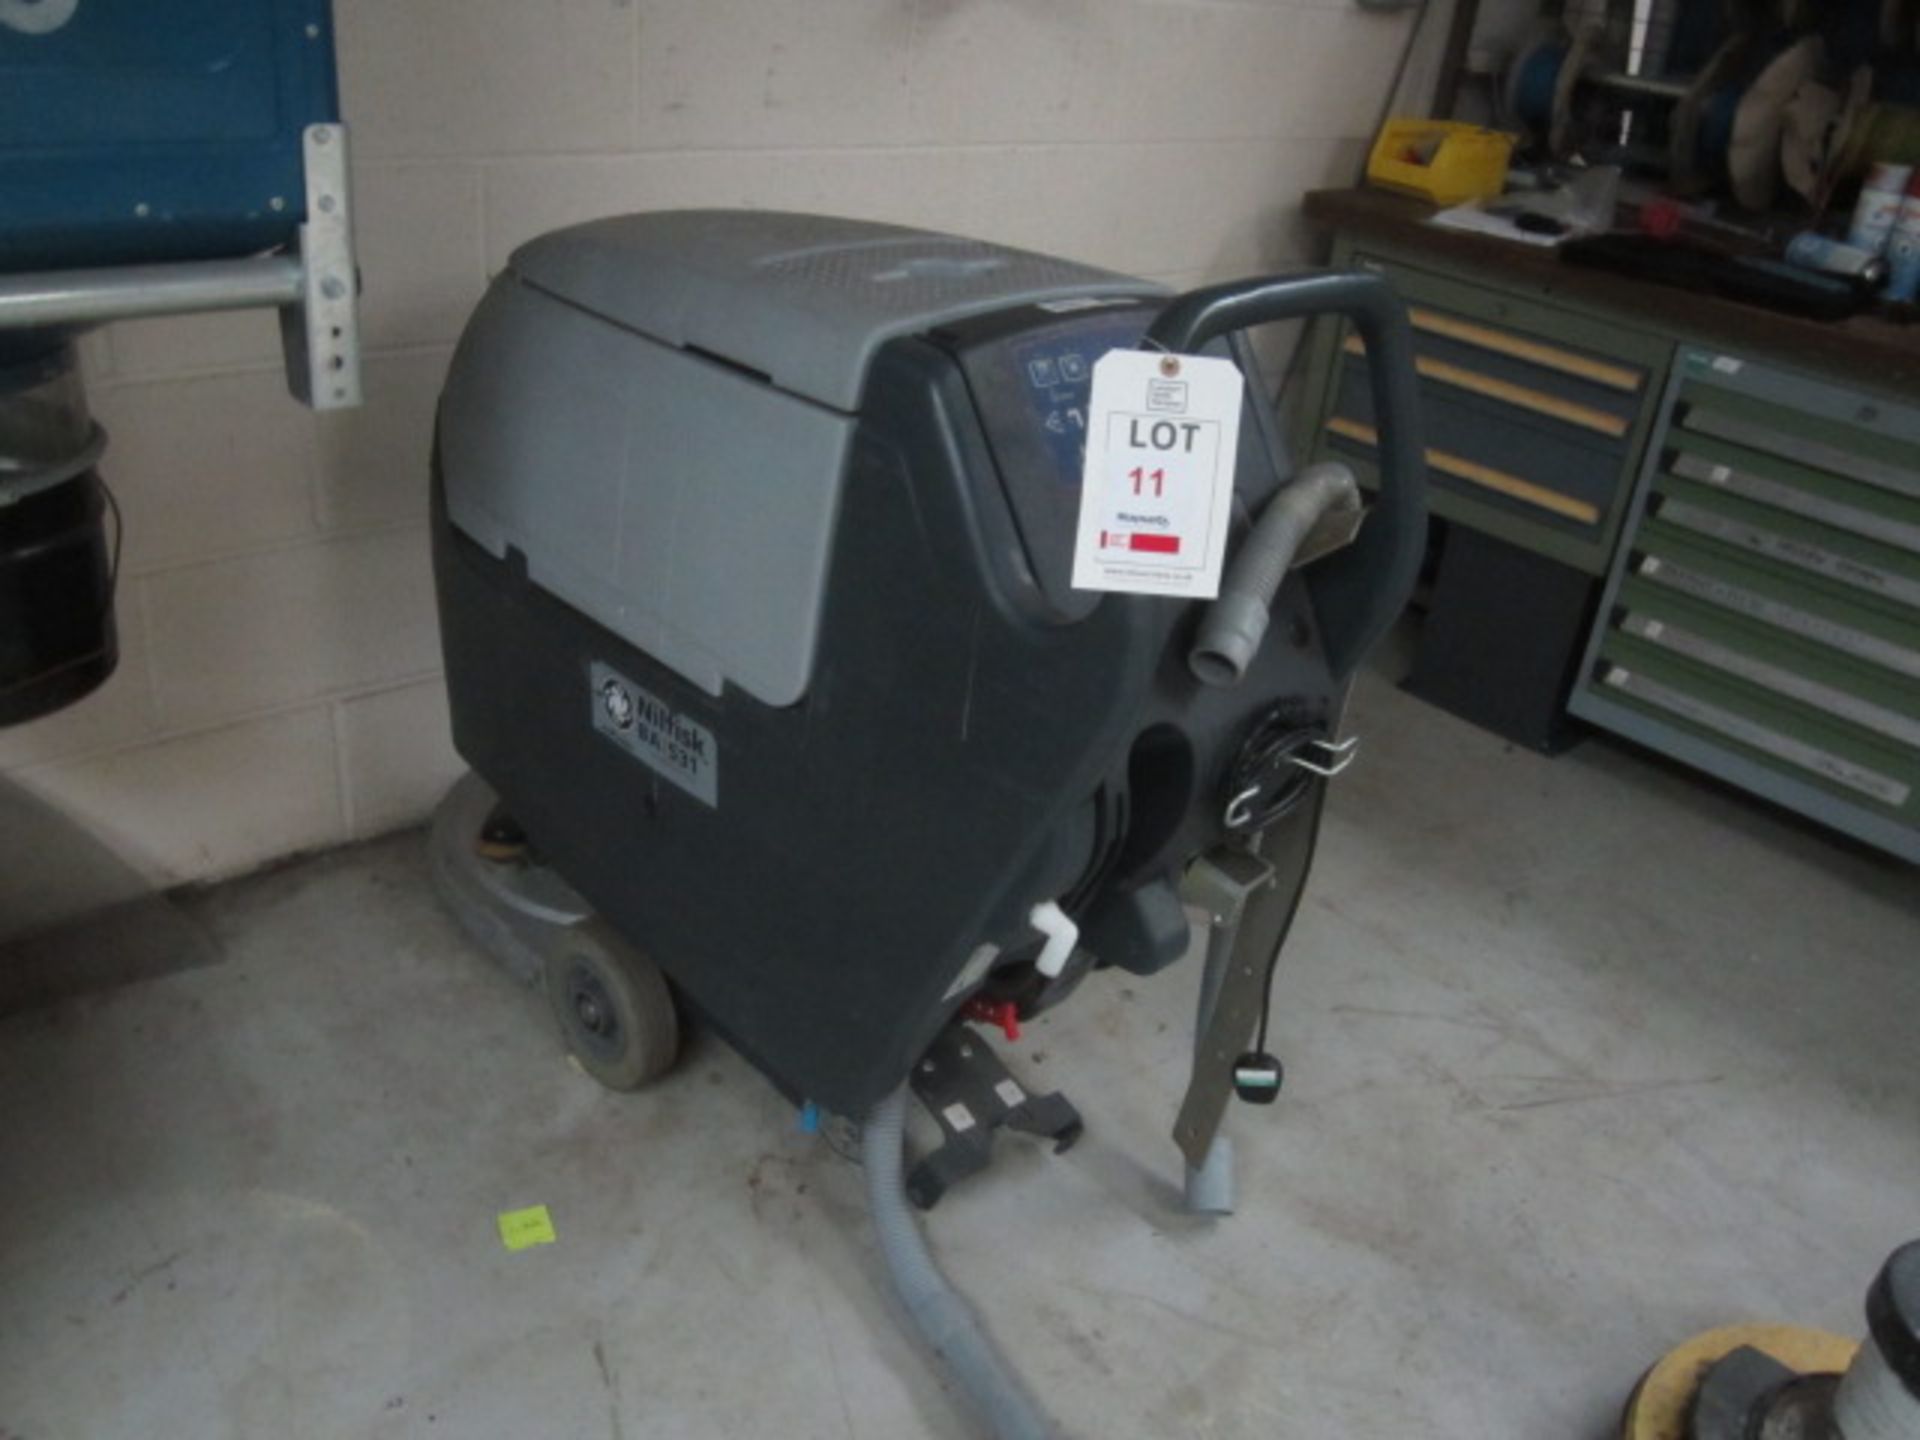 Nilfisk BA531 scrubber dryer, serial no. 073122982